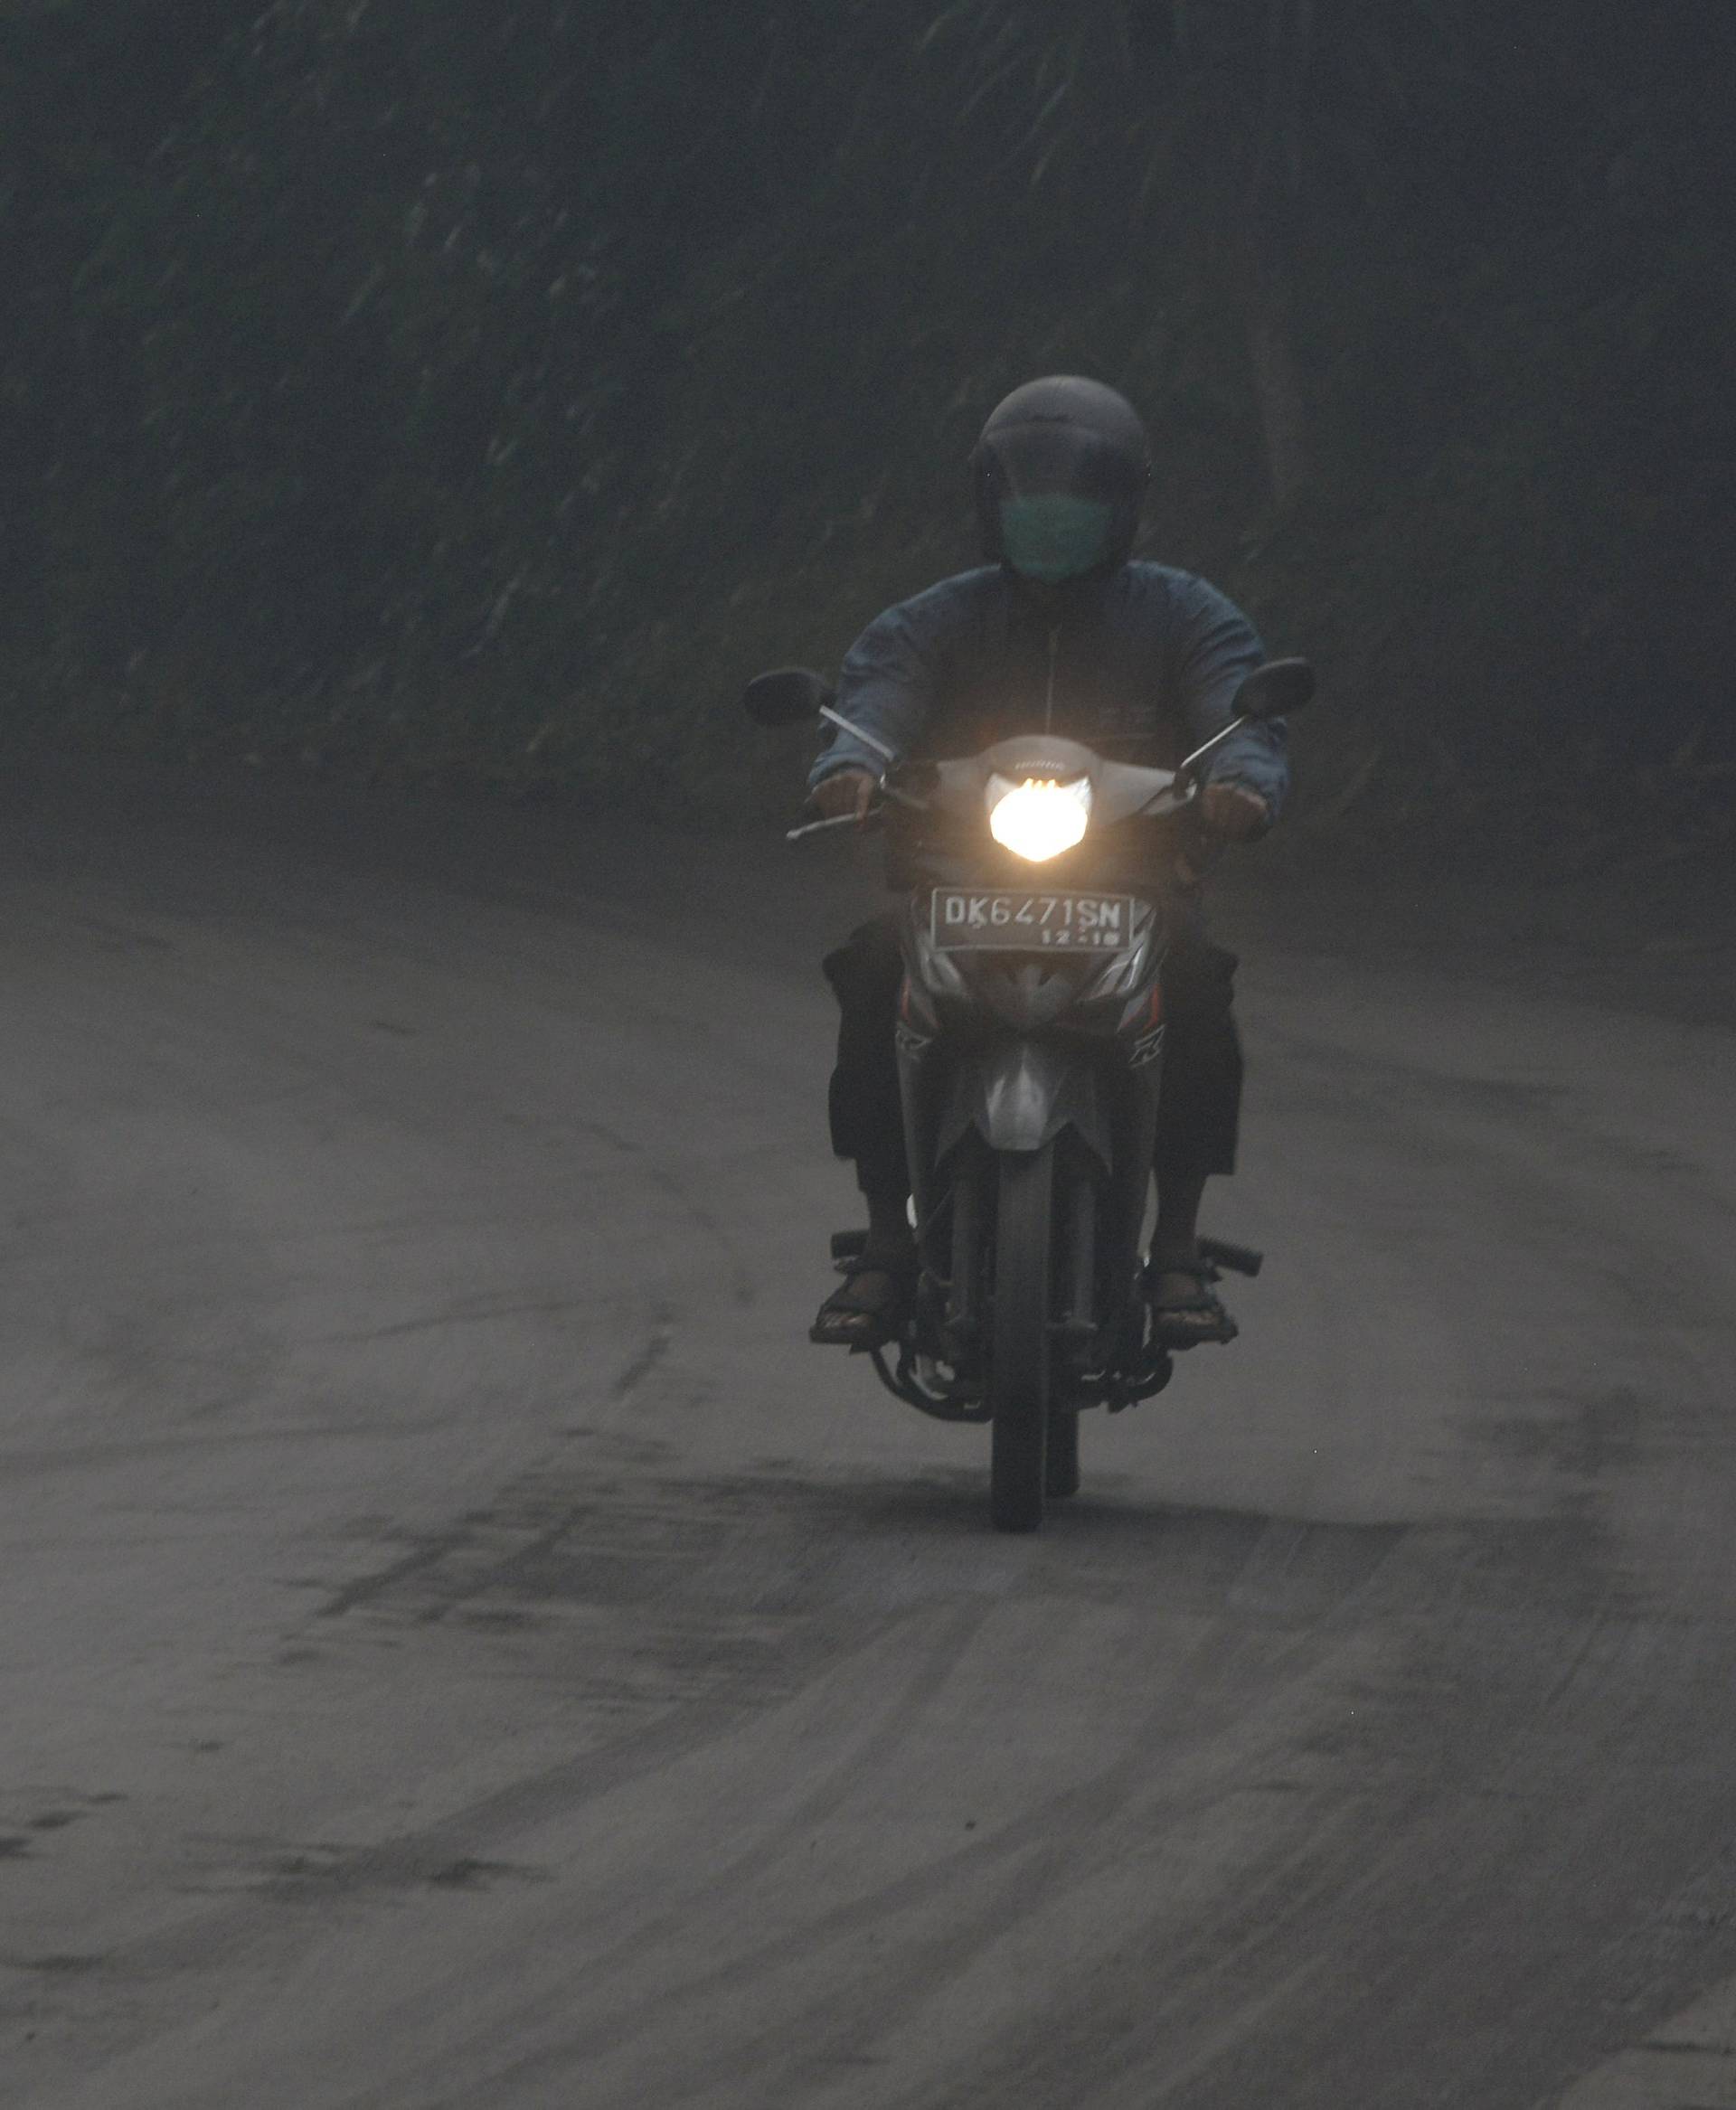 A motorist rides his motorbike during a shower of ash and rain from Mount Agung volcano during an eruption in Bebandem Village, Karangasem, Bali